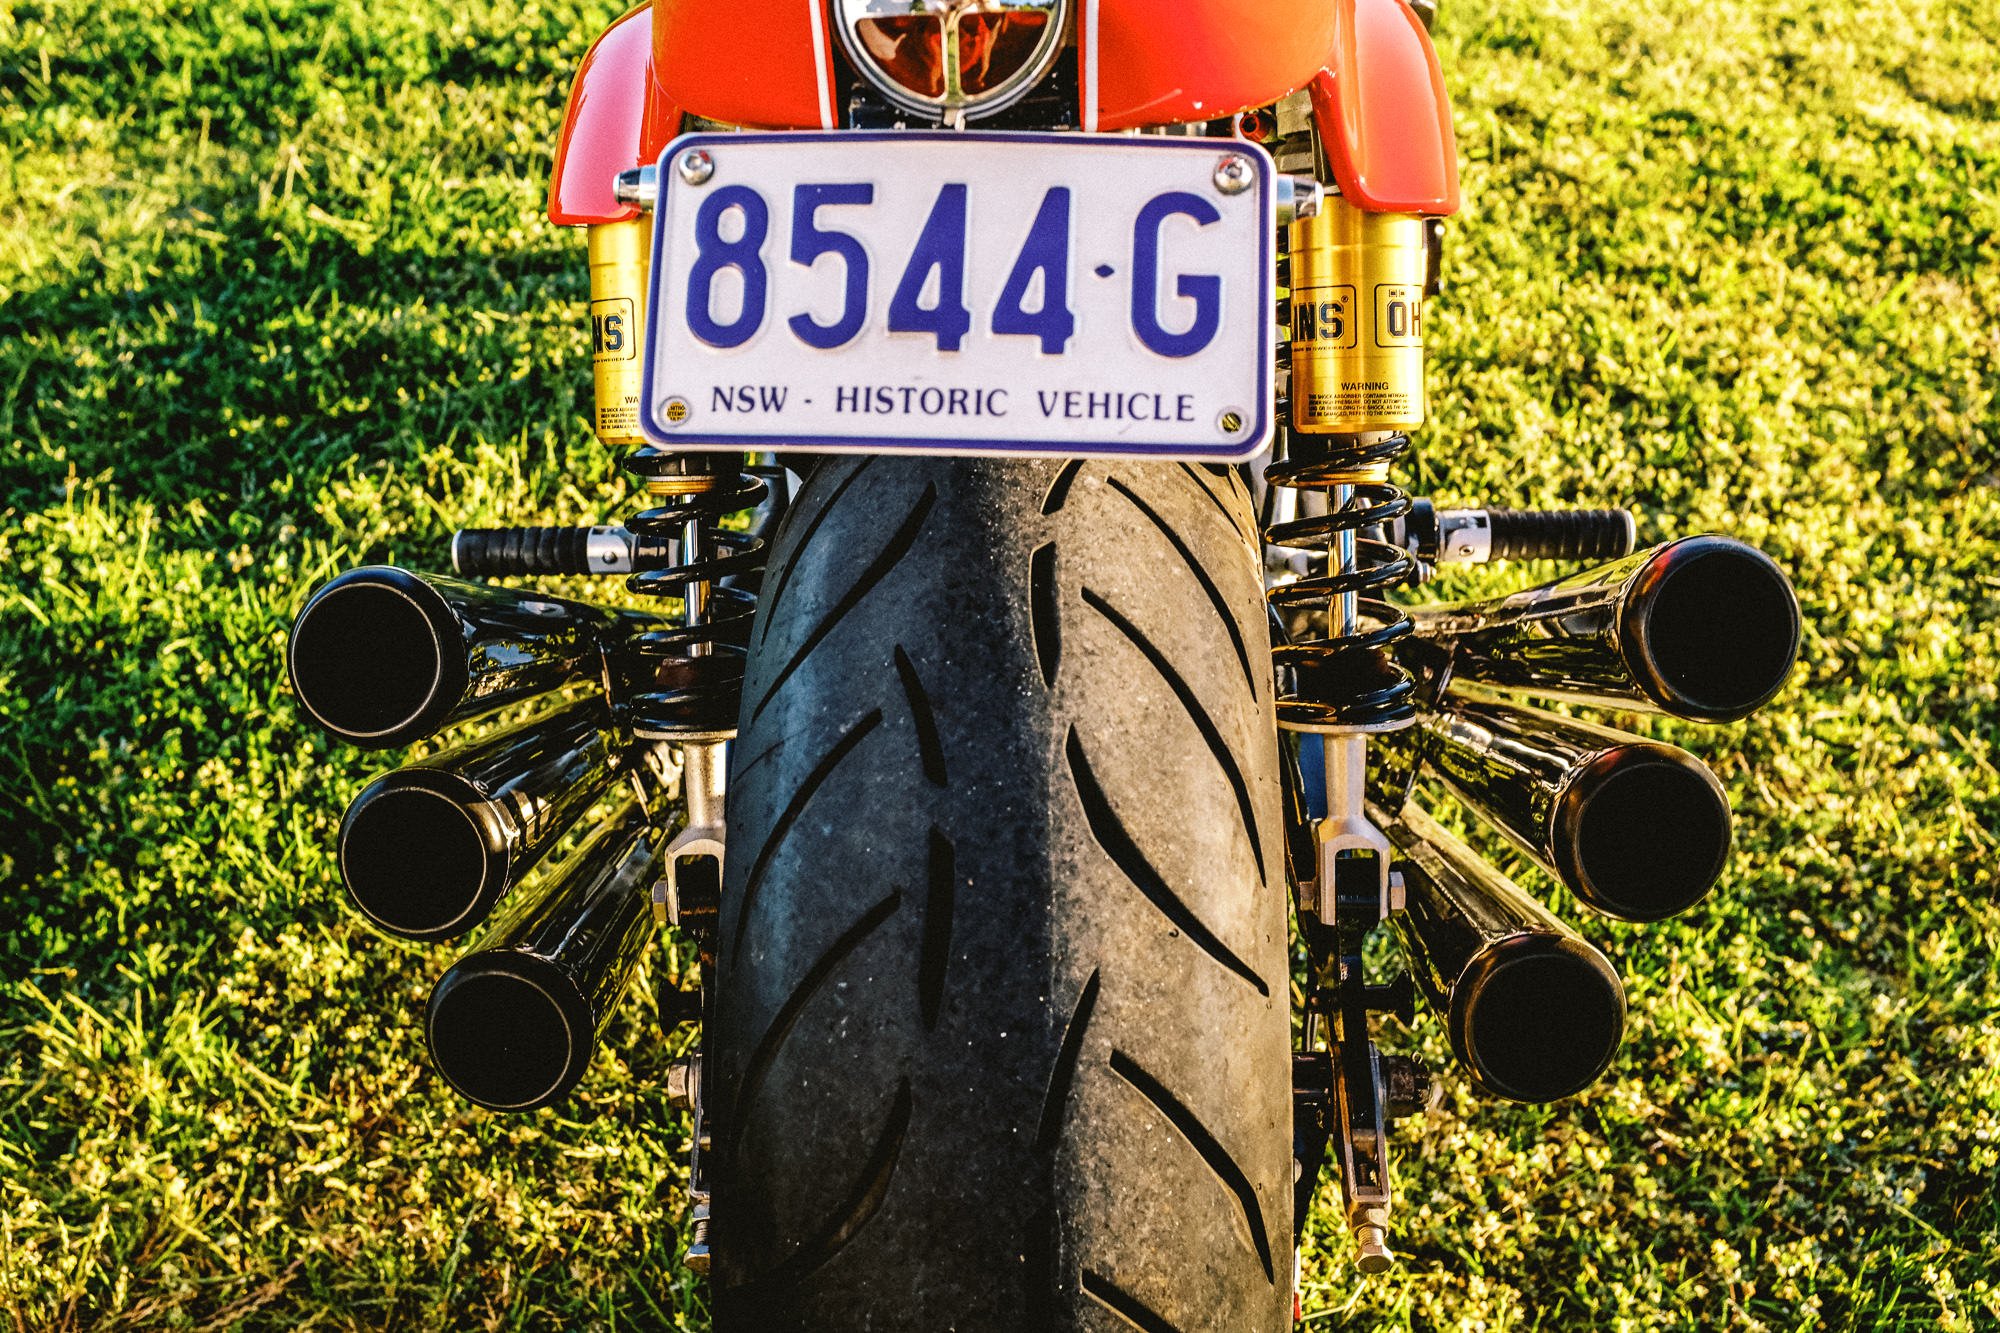 Australia's Most Famous CBX – The Honda CBX Cafe Racer By Motorretro